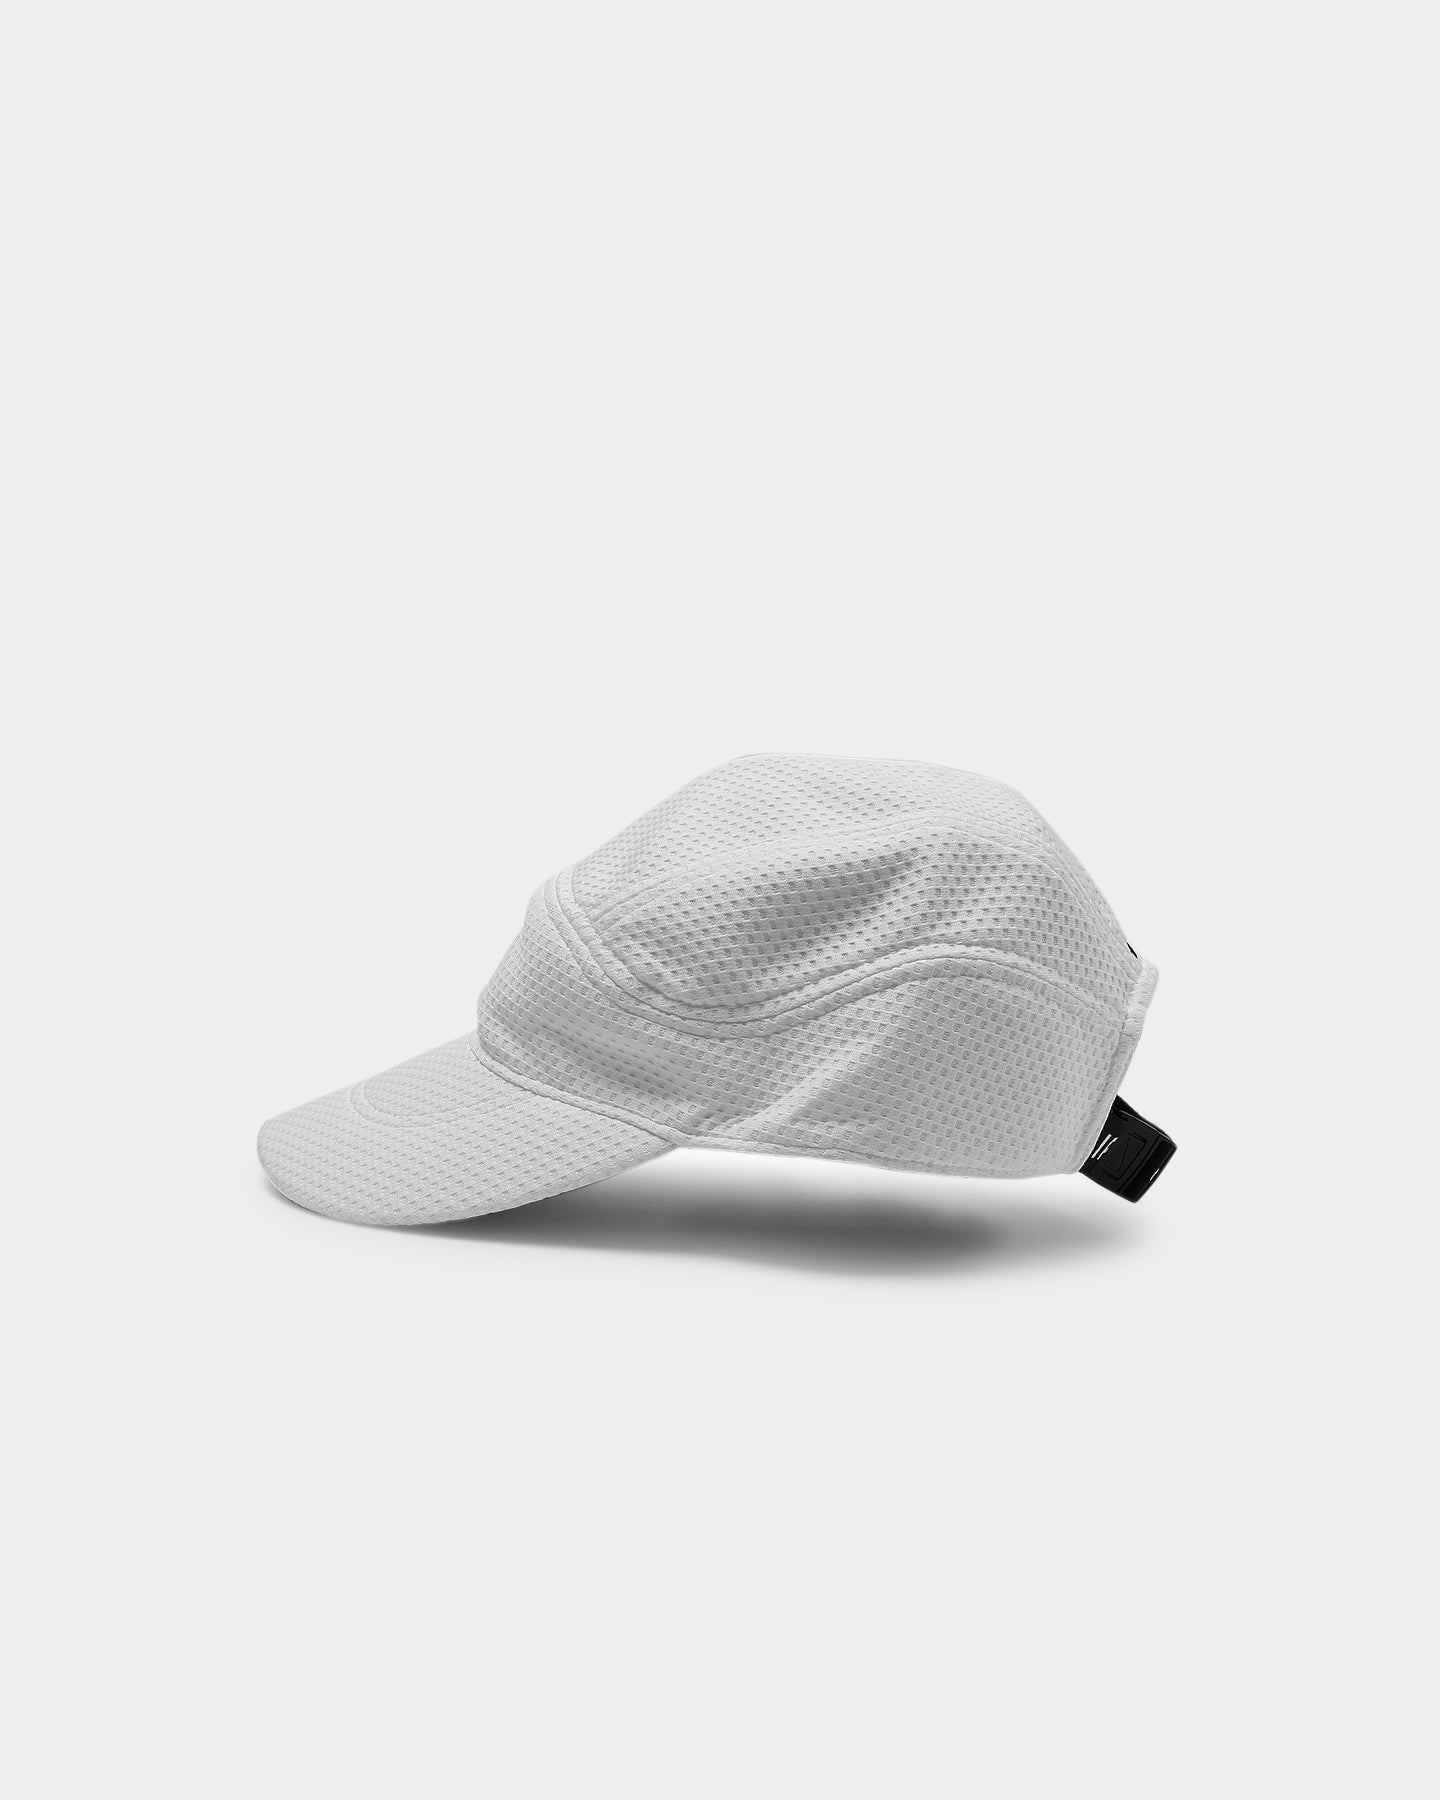 white nike tailwind hat